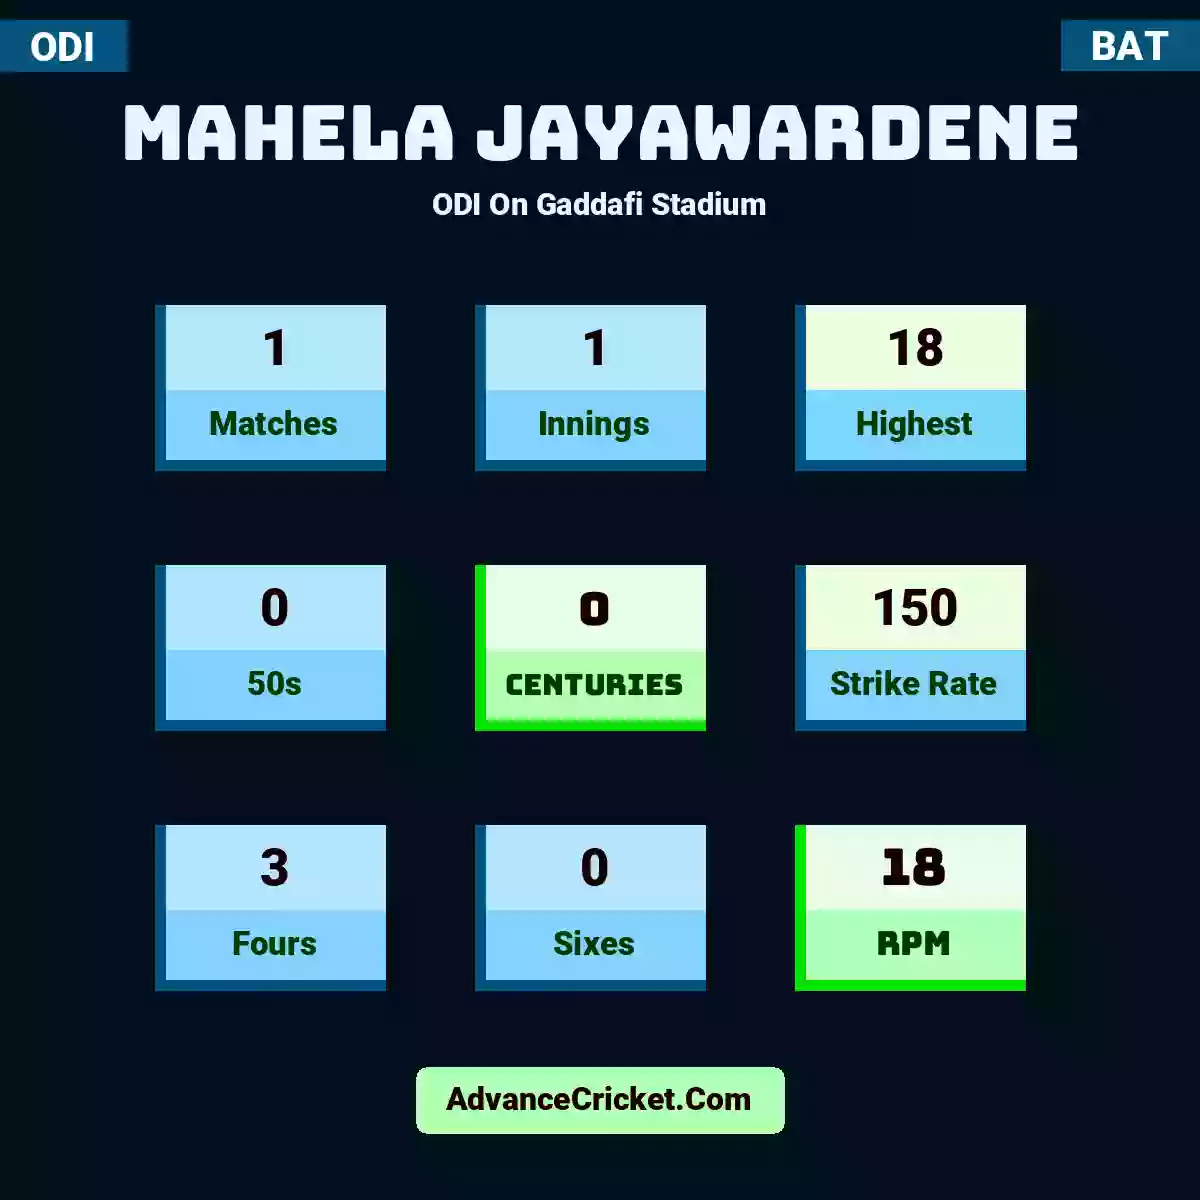 Mahela Jayawardene ODI  On Gaddafi Stadium, Mahela Jayawardene played 1 matches, scored 18 runs as highest, 0 half-centuries, and 0 centuries, with a strike rate of 150. M.Jayawardene hit 3 fours and 0 sixes, with an RPM of 18.